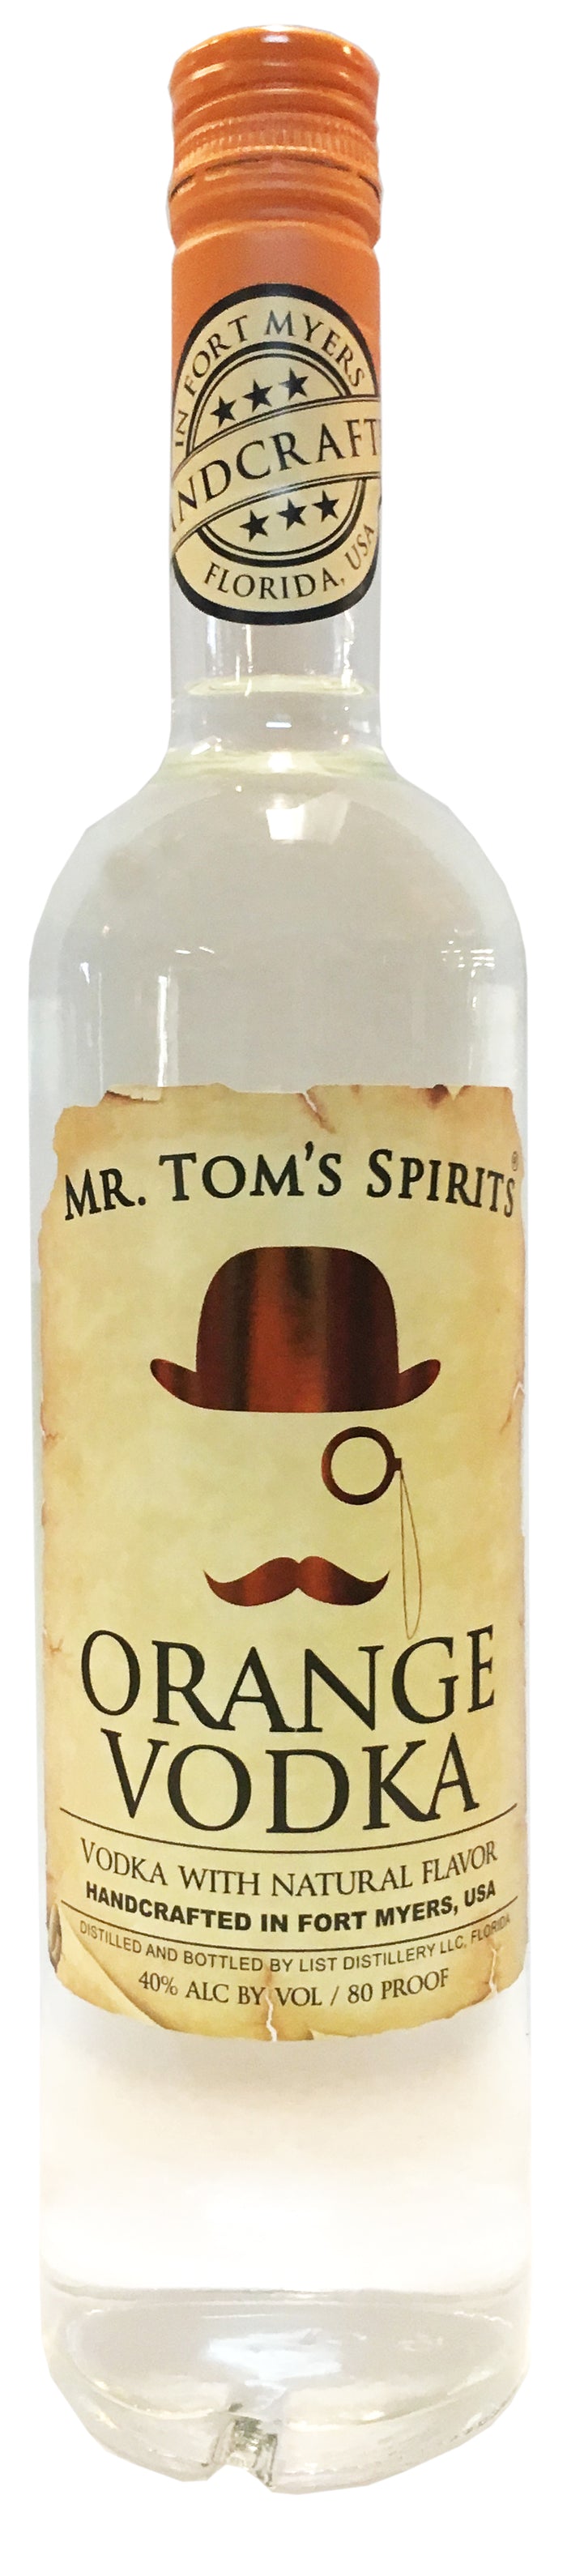 Mr. Tom's Spirits Orange Vodka